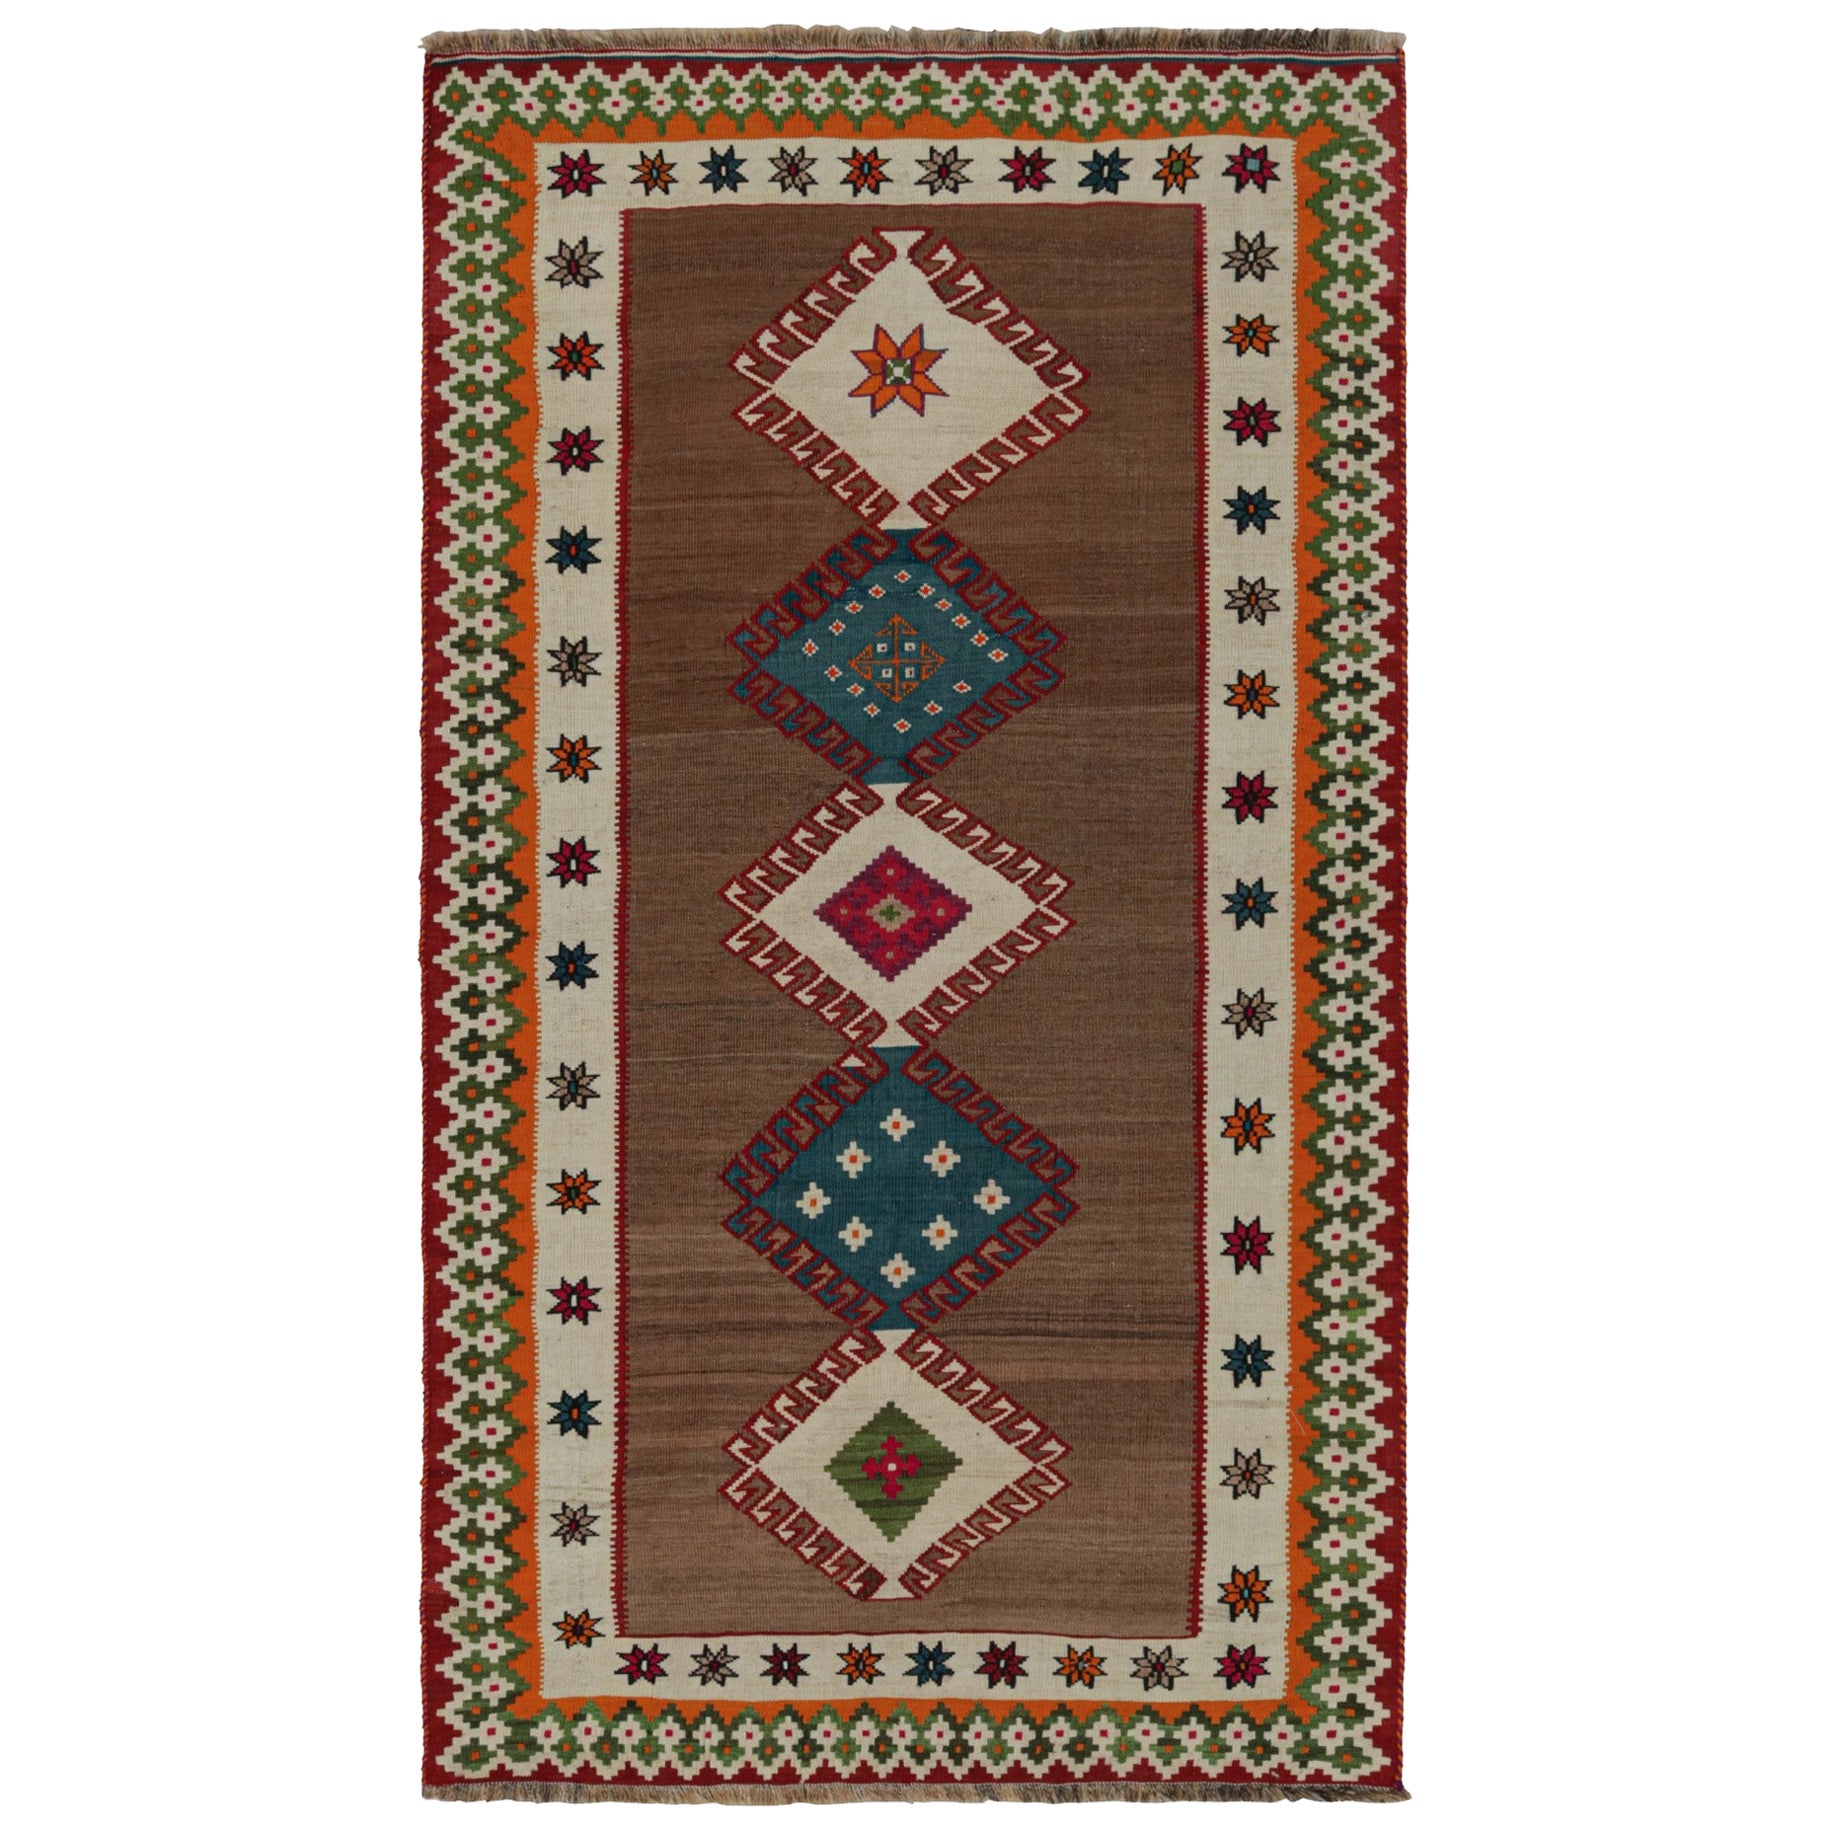 Vintage Tribal Afghan Kilim Rug, with Geometric Patterns, from Rug & Kilim For Sale